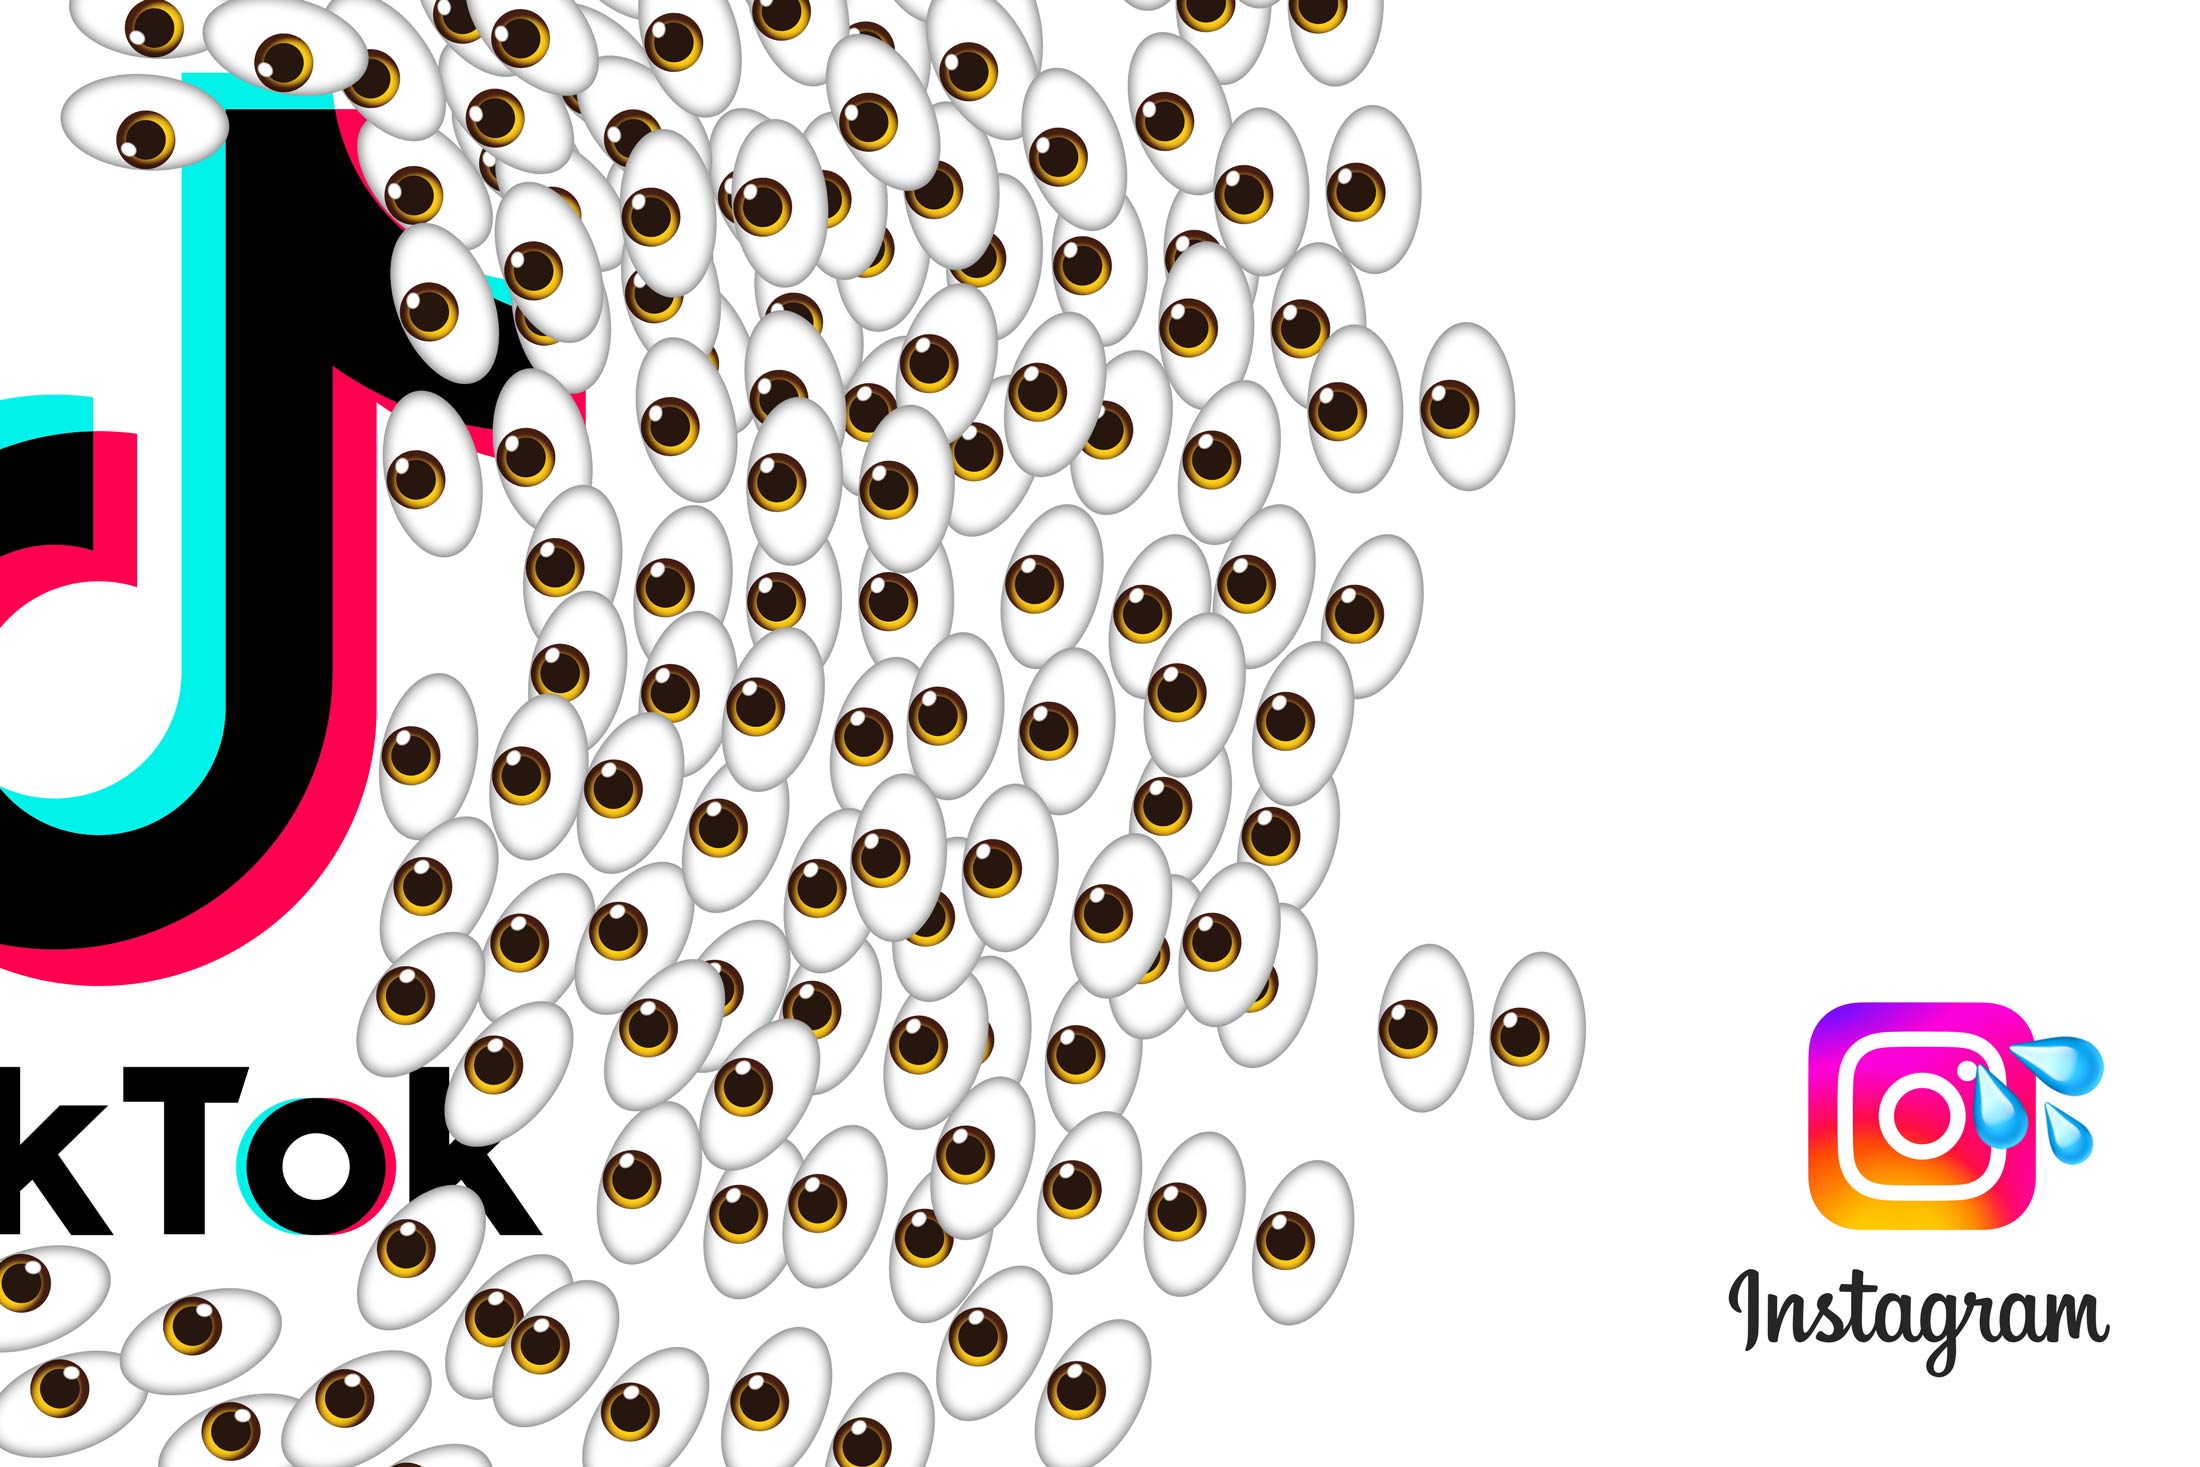 Facebook Copies TikTok App to Make Instagram Cool to Teens - Bloomberg